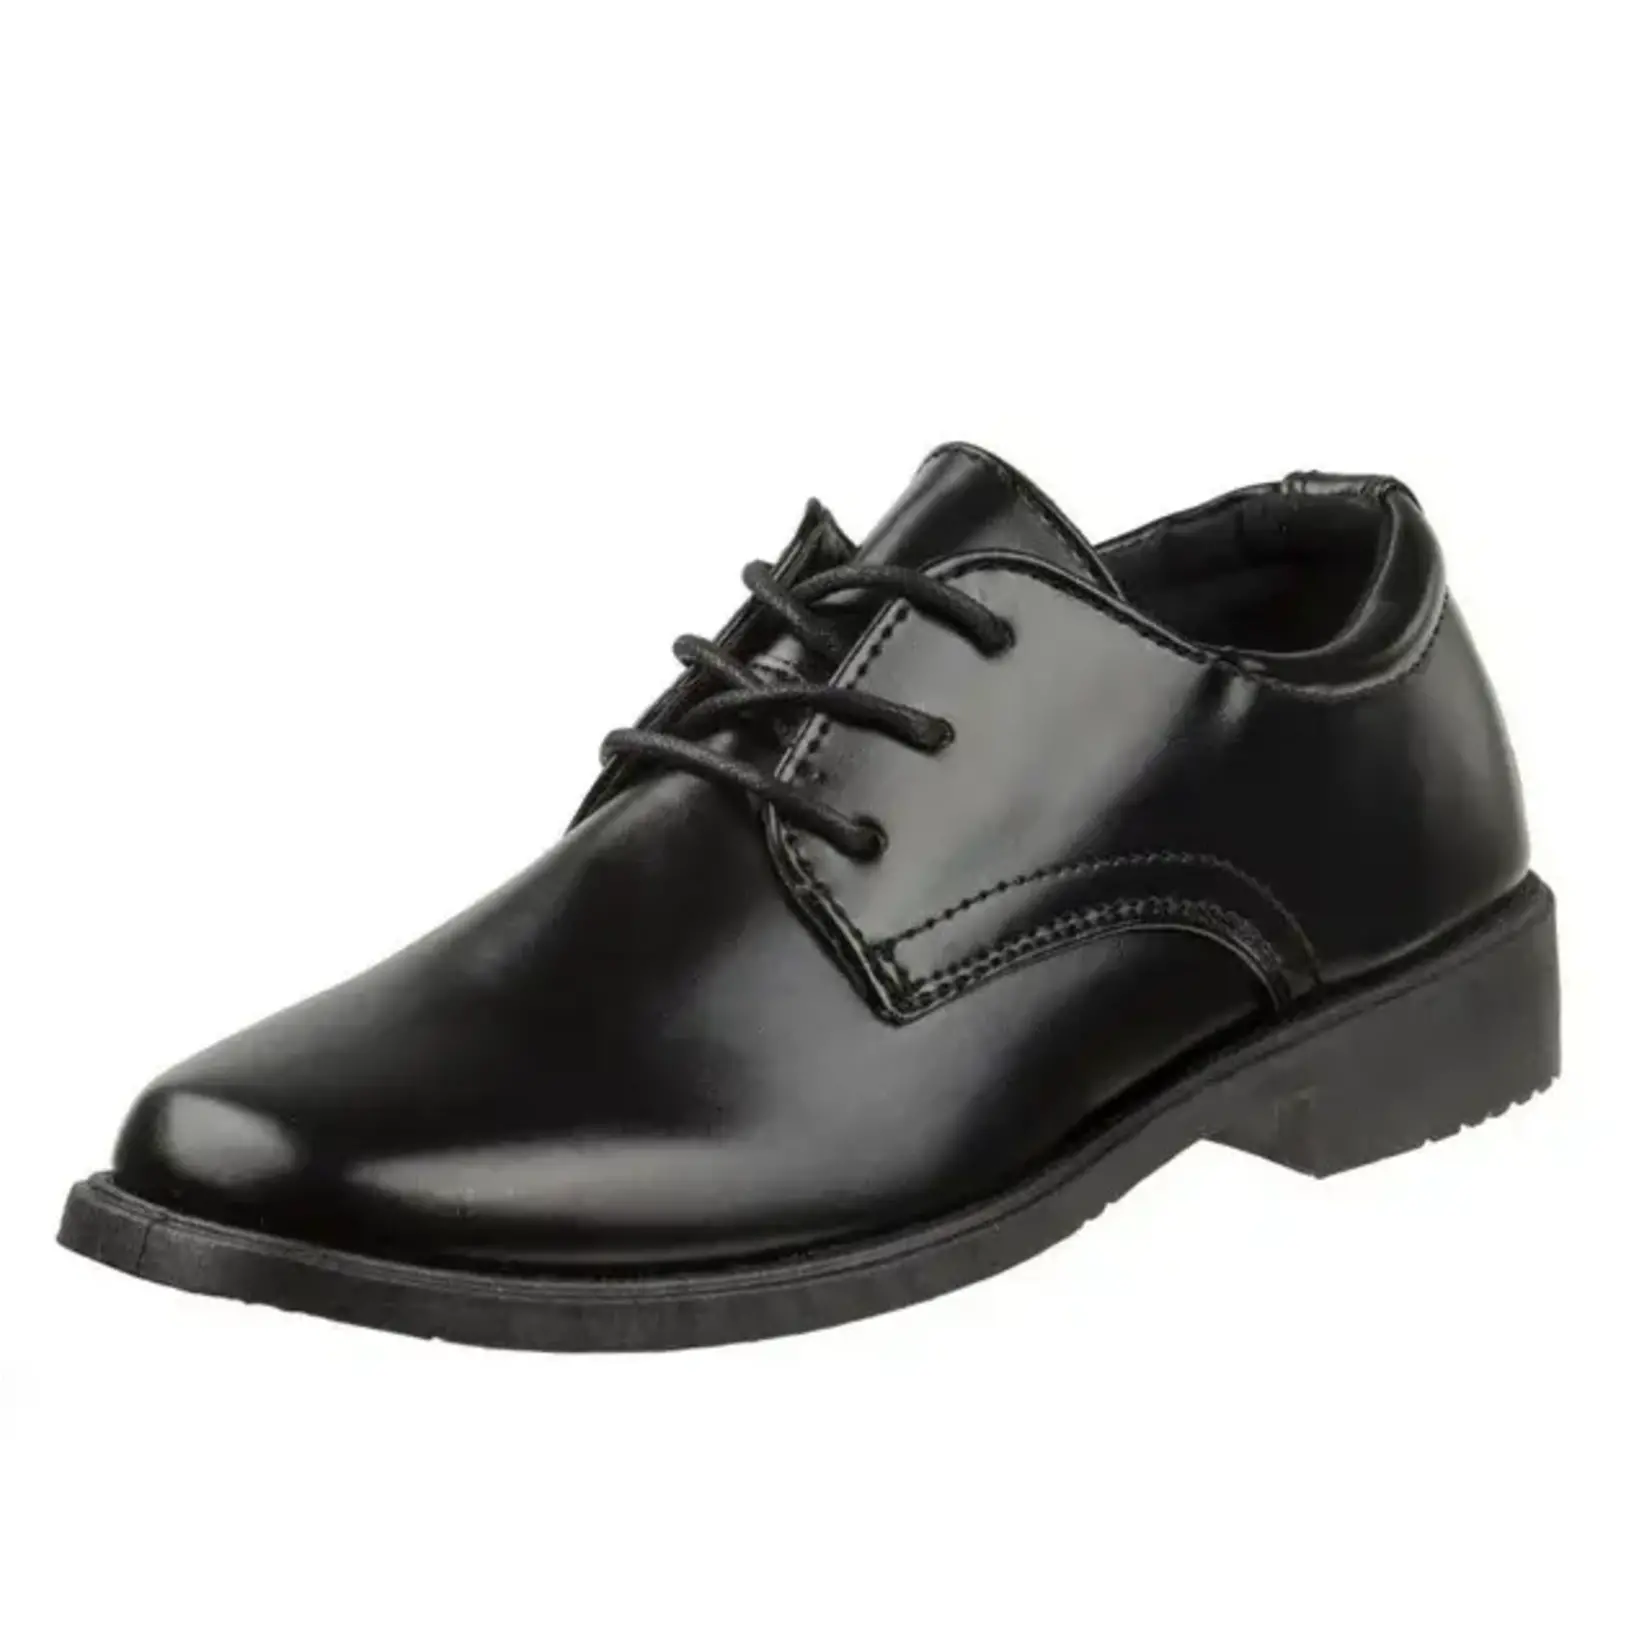 JOSMO SHOES Josmo Boys Classic Oxford Casual Dress Shoe - 80351